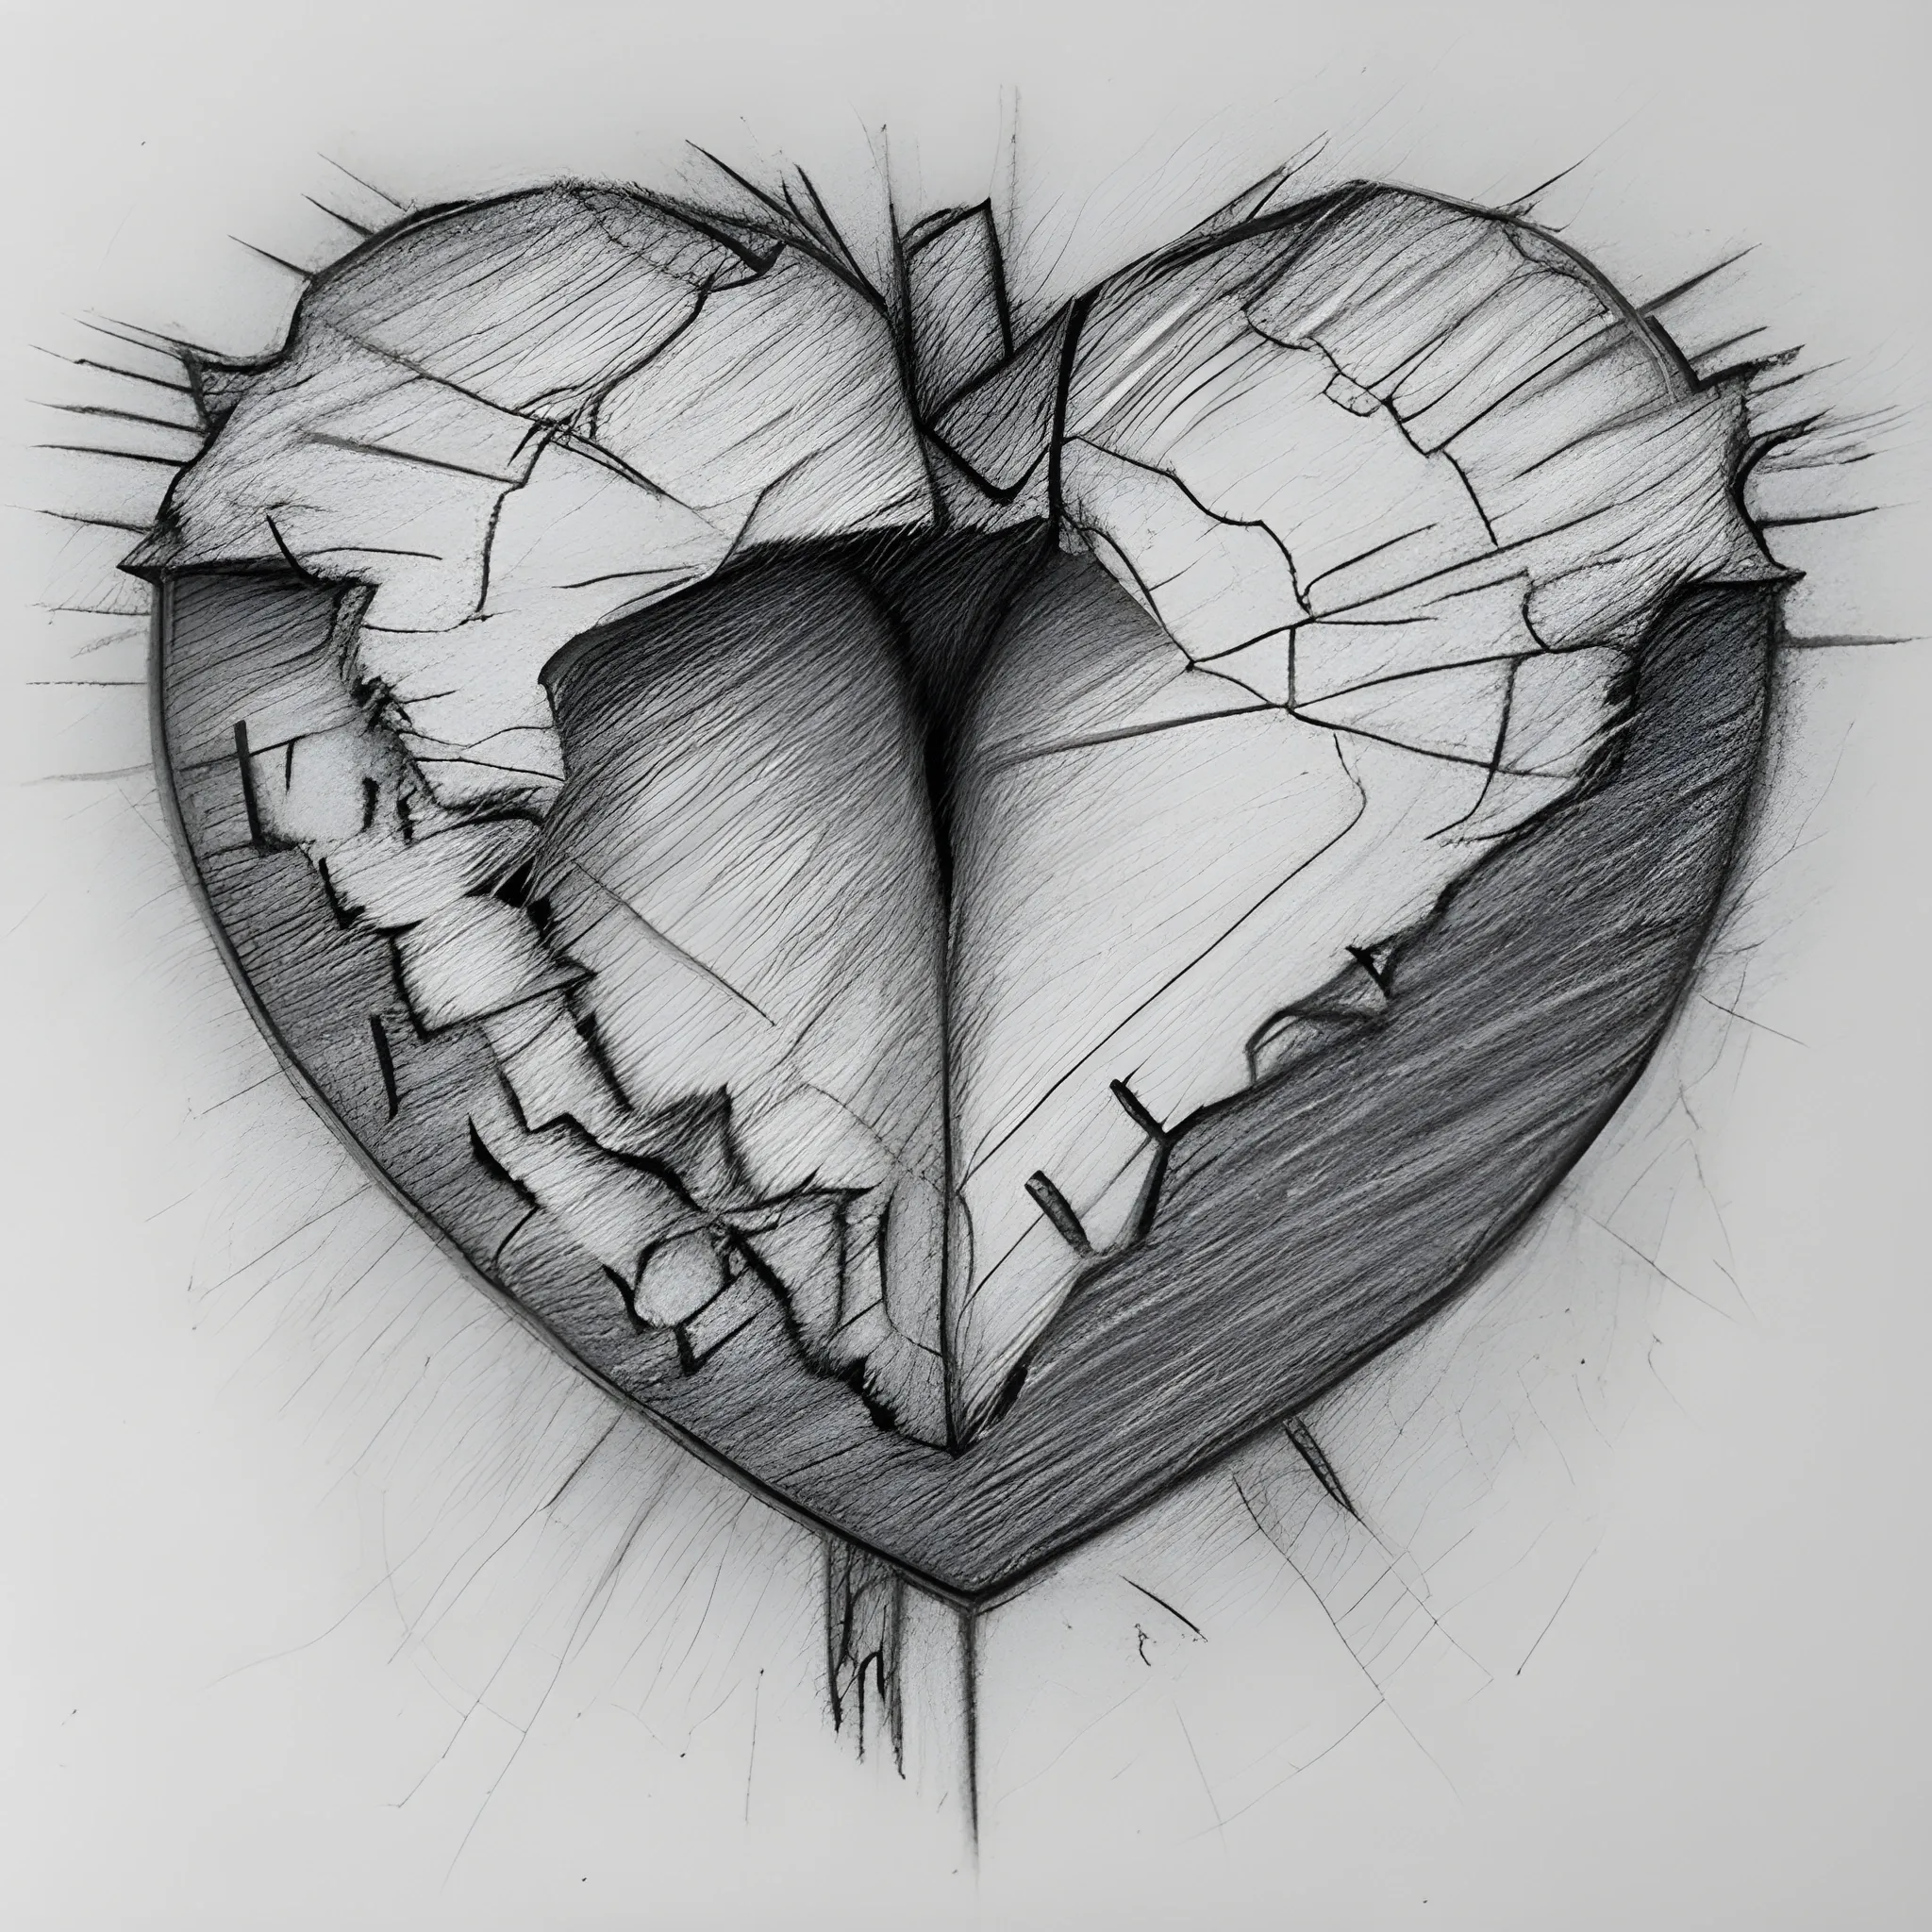 Torn Up Heart, Pencil Sketch - Arthub.ai